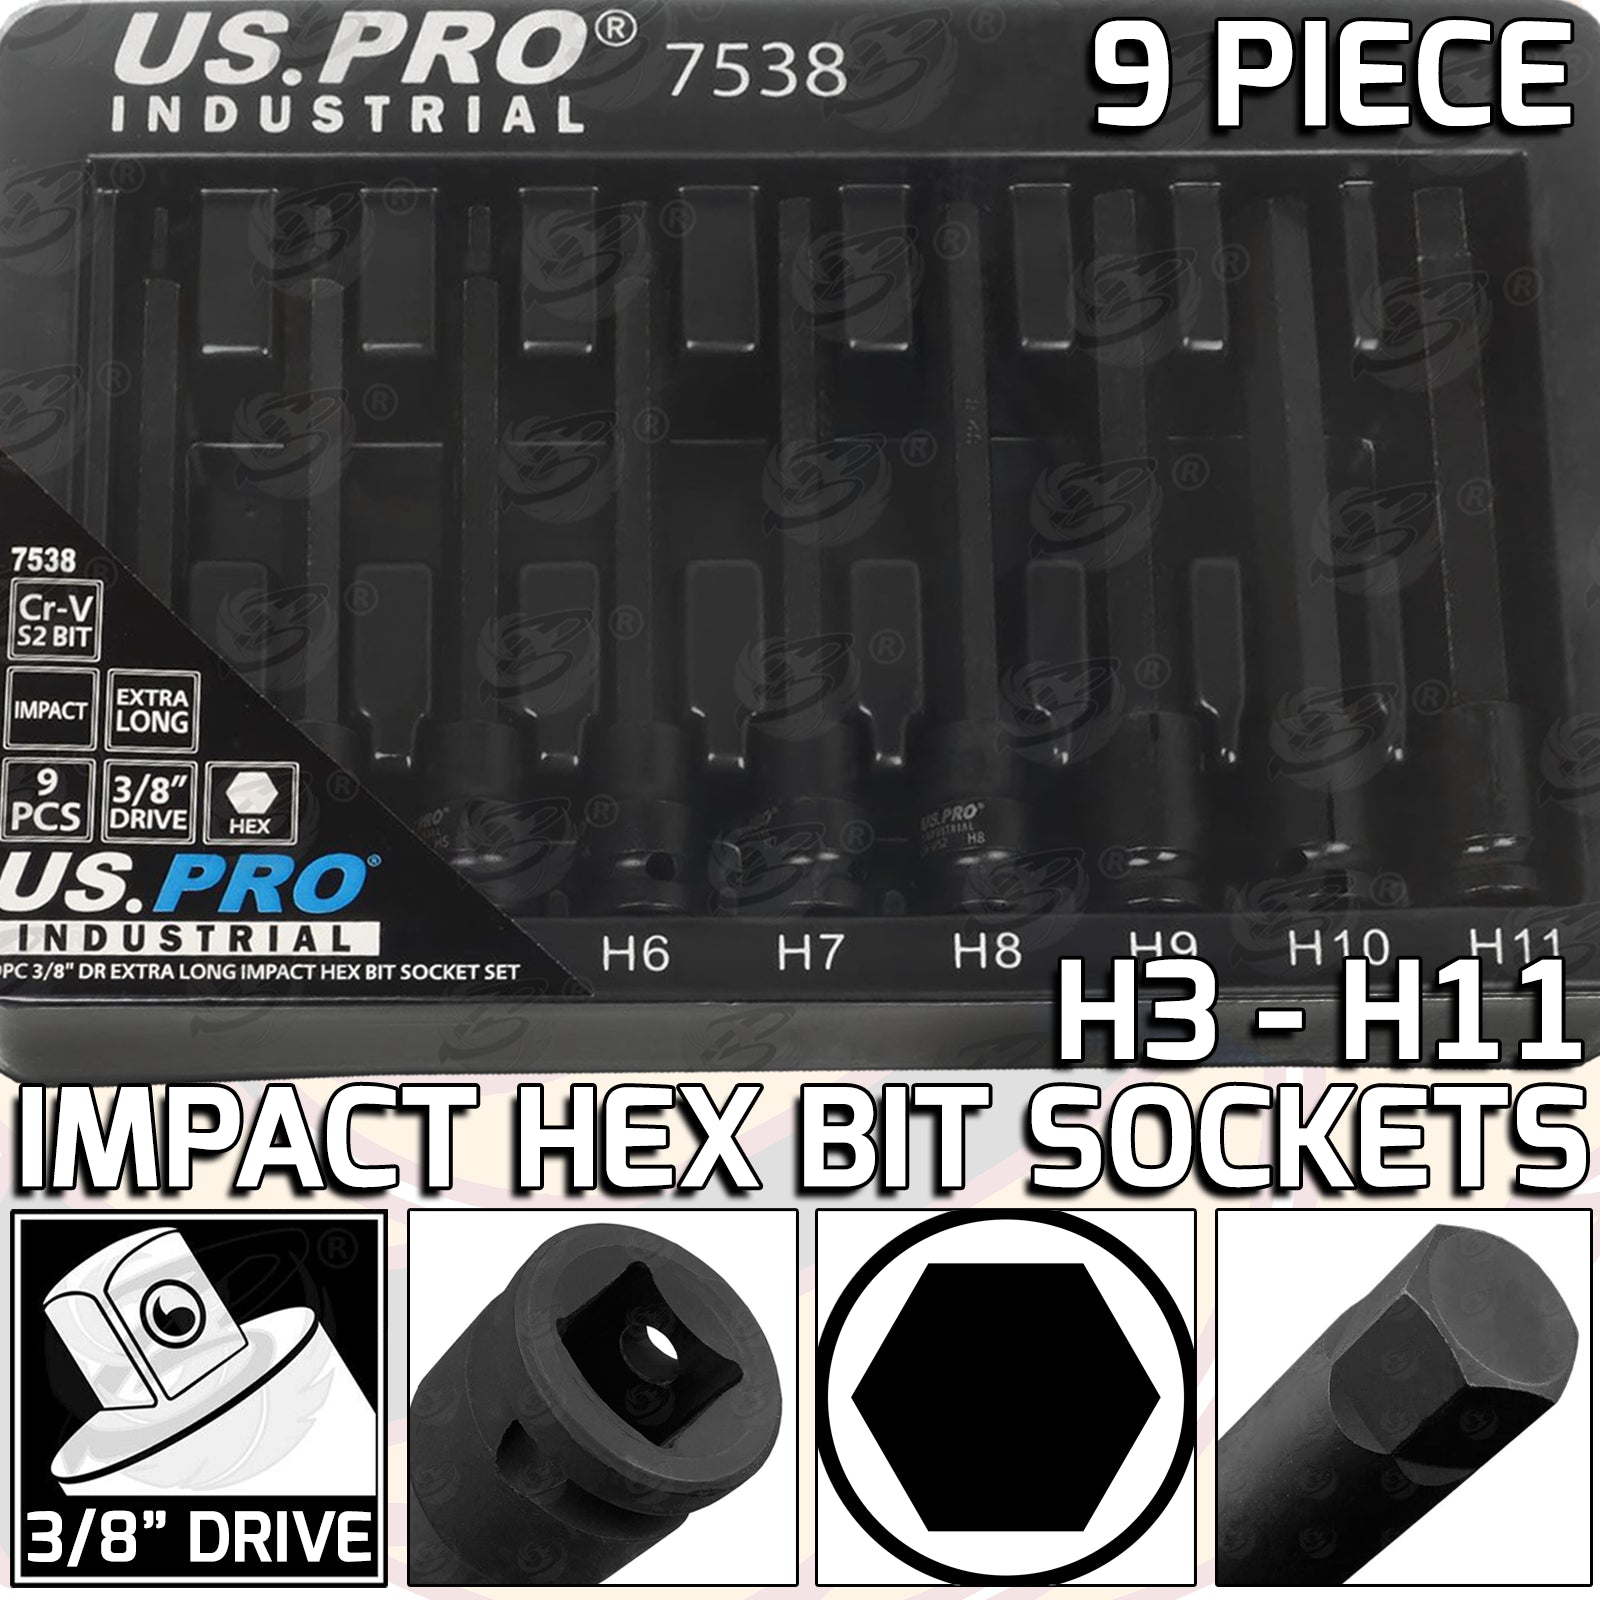 US PRO INDUSTRIAL 9PCS 3/8" DRIVE EXTRA LONG IMPACT HEX BIT SOCKETS H3 - H11